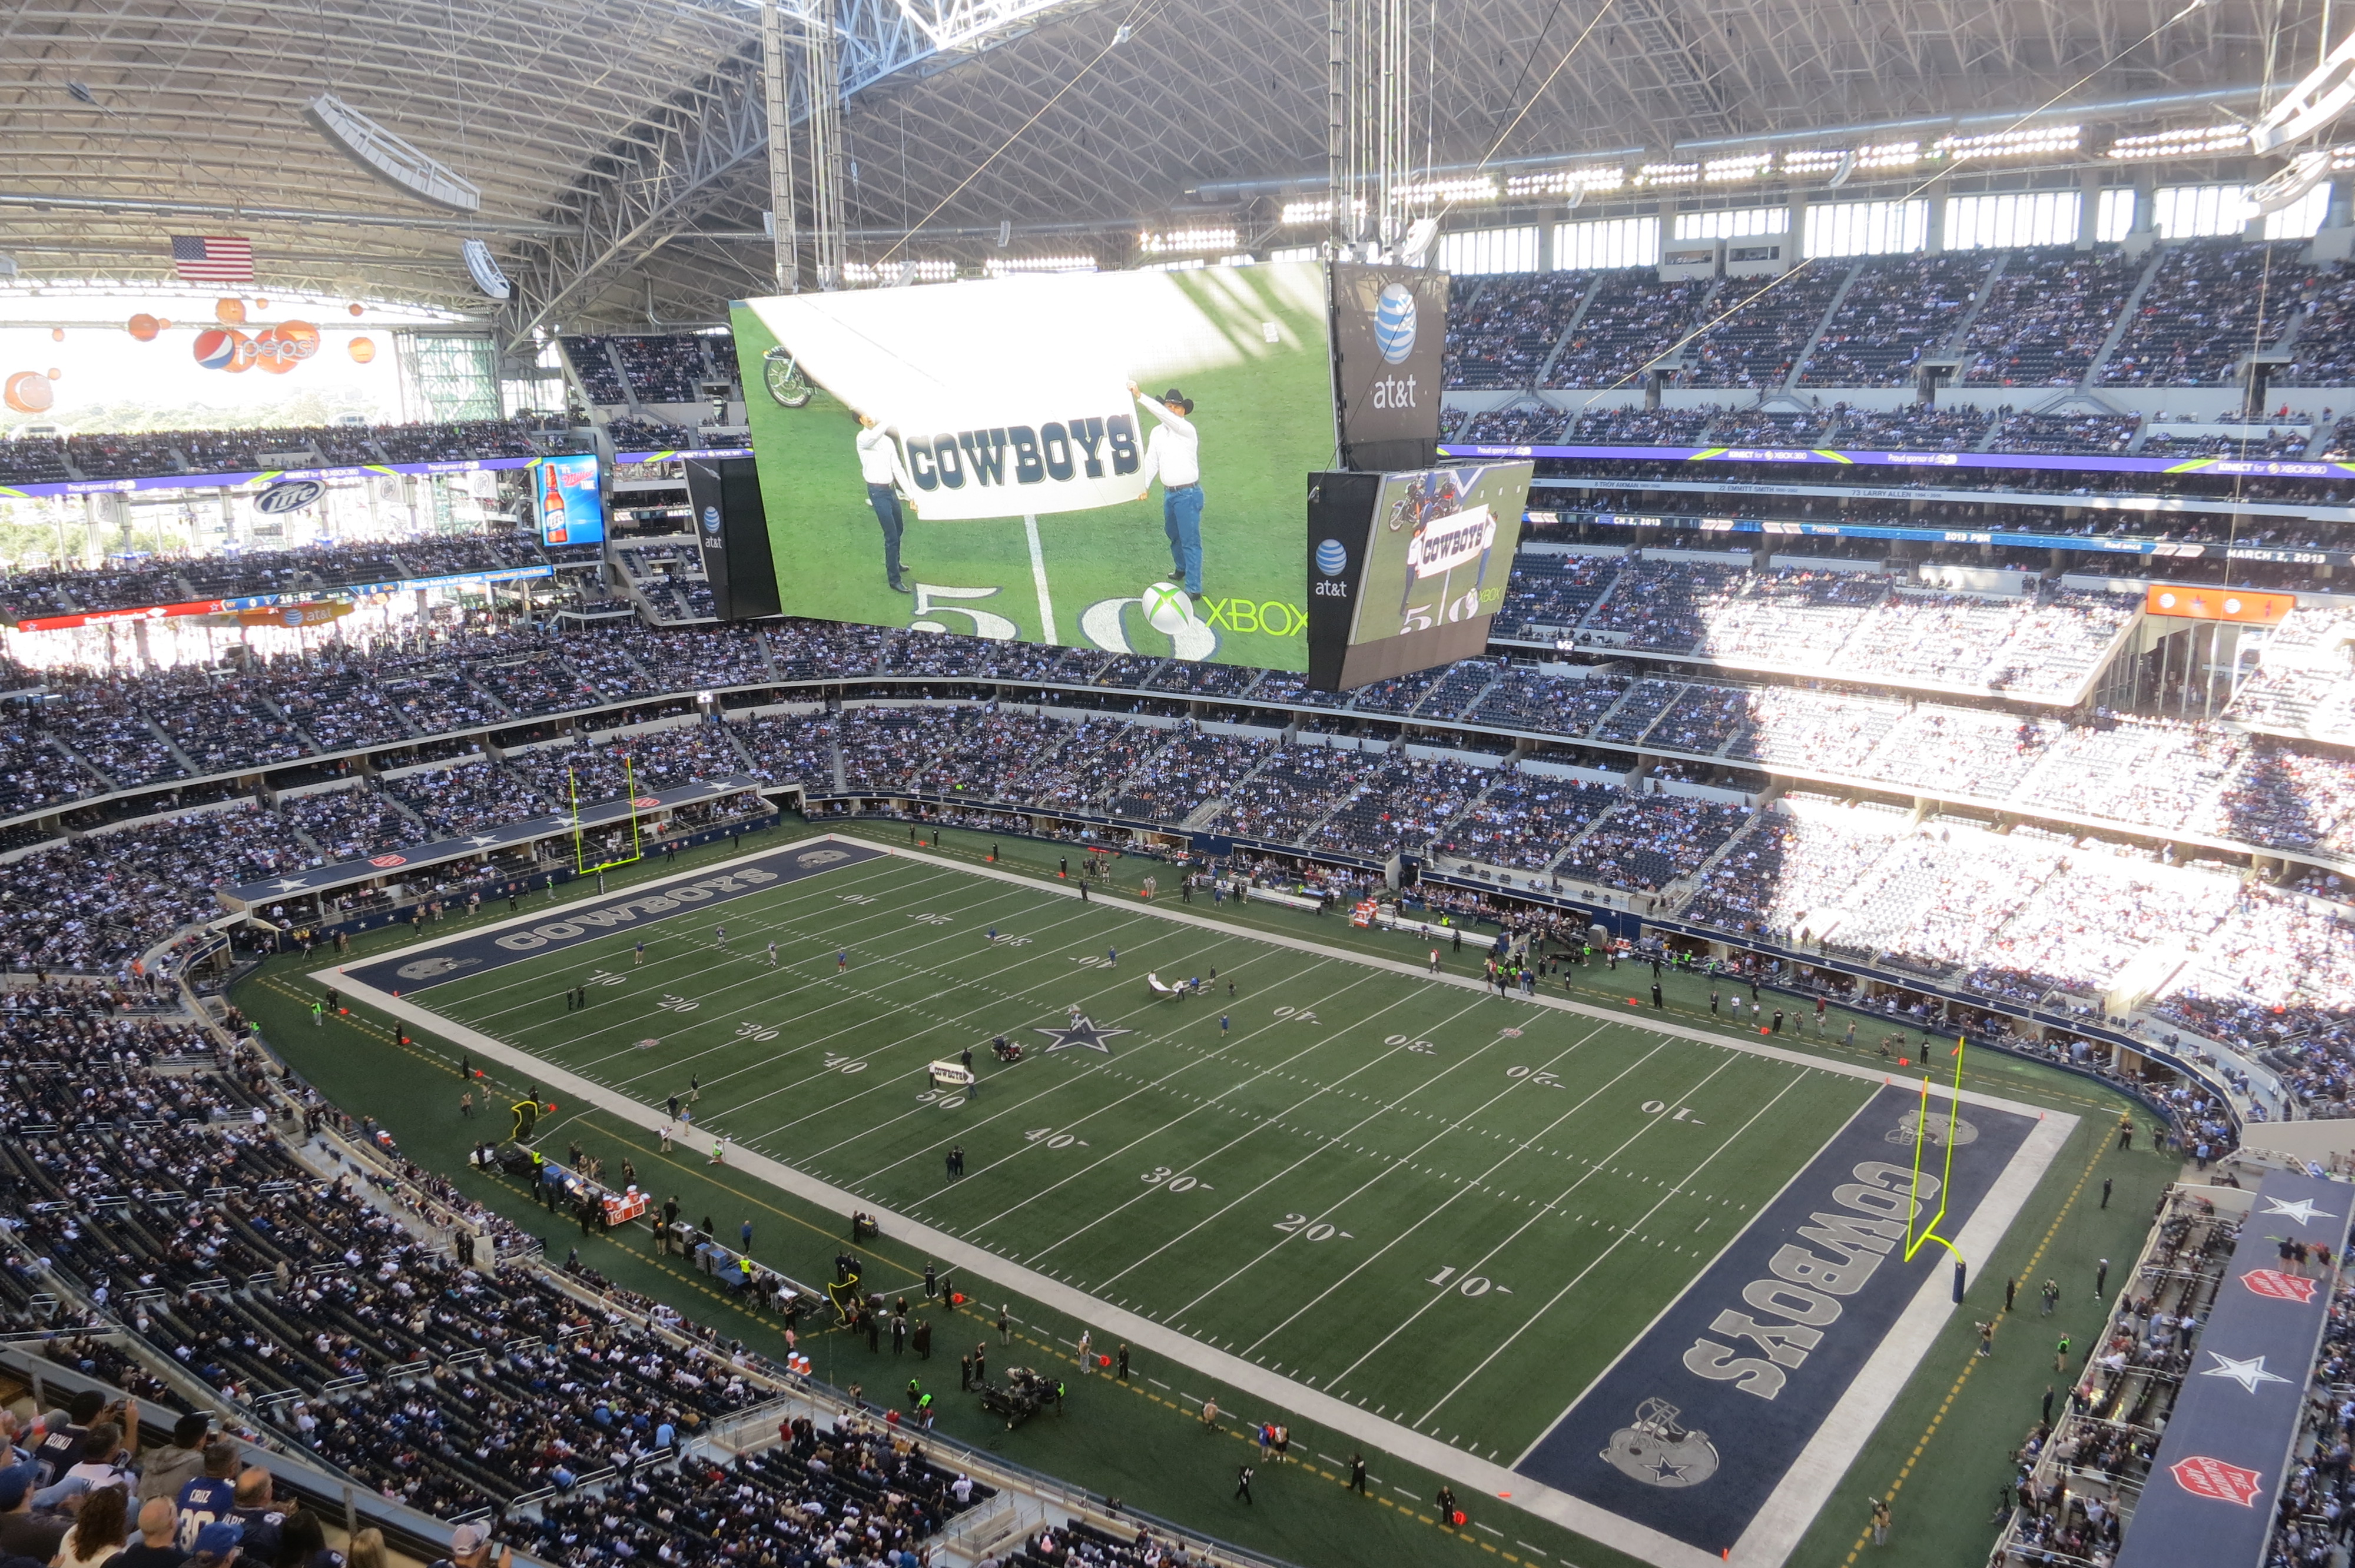 At t stadium. Att Stadium. At t Stadium в Арлингтоне. Dallas Cowboys New Stadium Seat view. At t Stadium Dallas футбол.